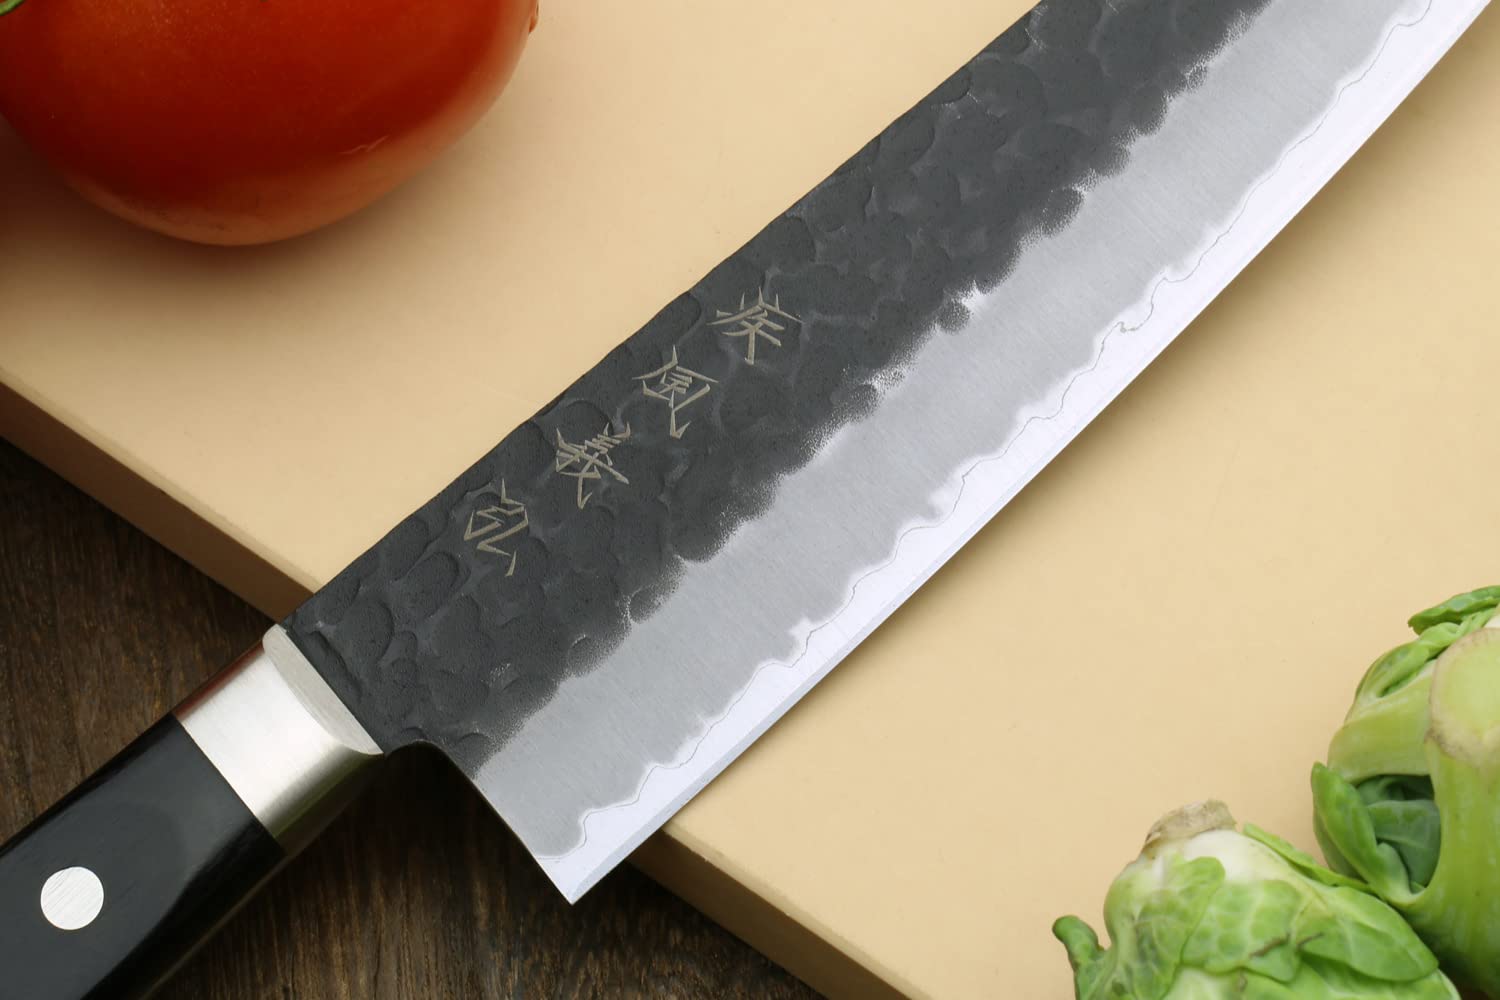 Yoshihiro Kurouchi Super Blue Steel Stainless Clad Santoku Multipurpose Chef Knife (7" (180mm) & Saya, Black Pakkawood Handle)